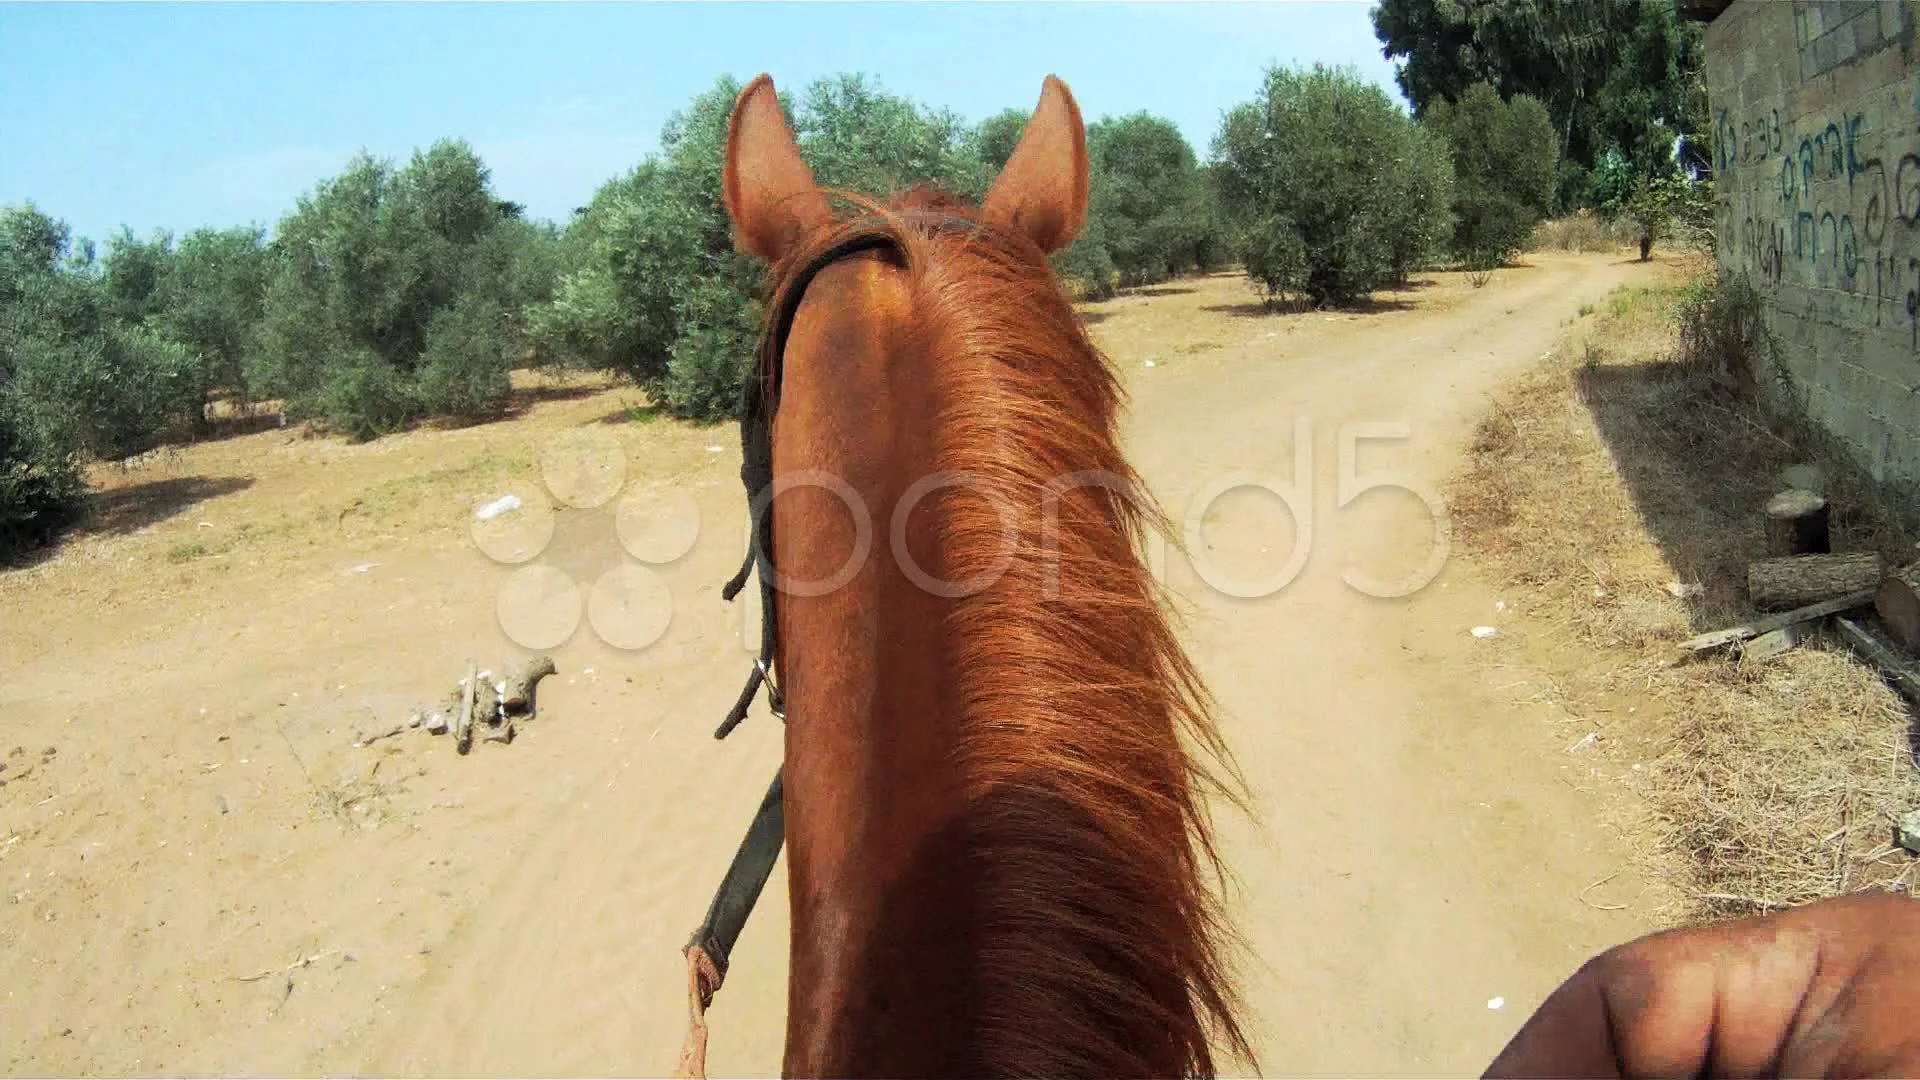 Take a 360-degree GoPro ride on winning horse American Pharoah - CNET